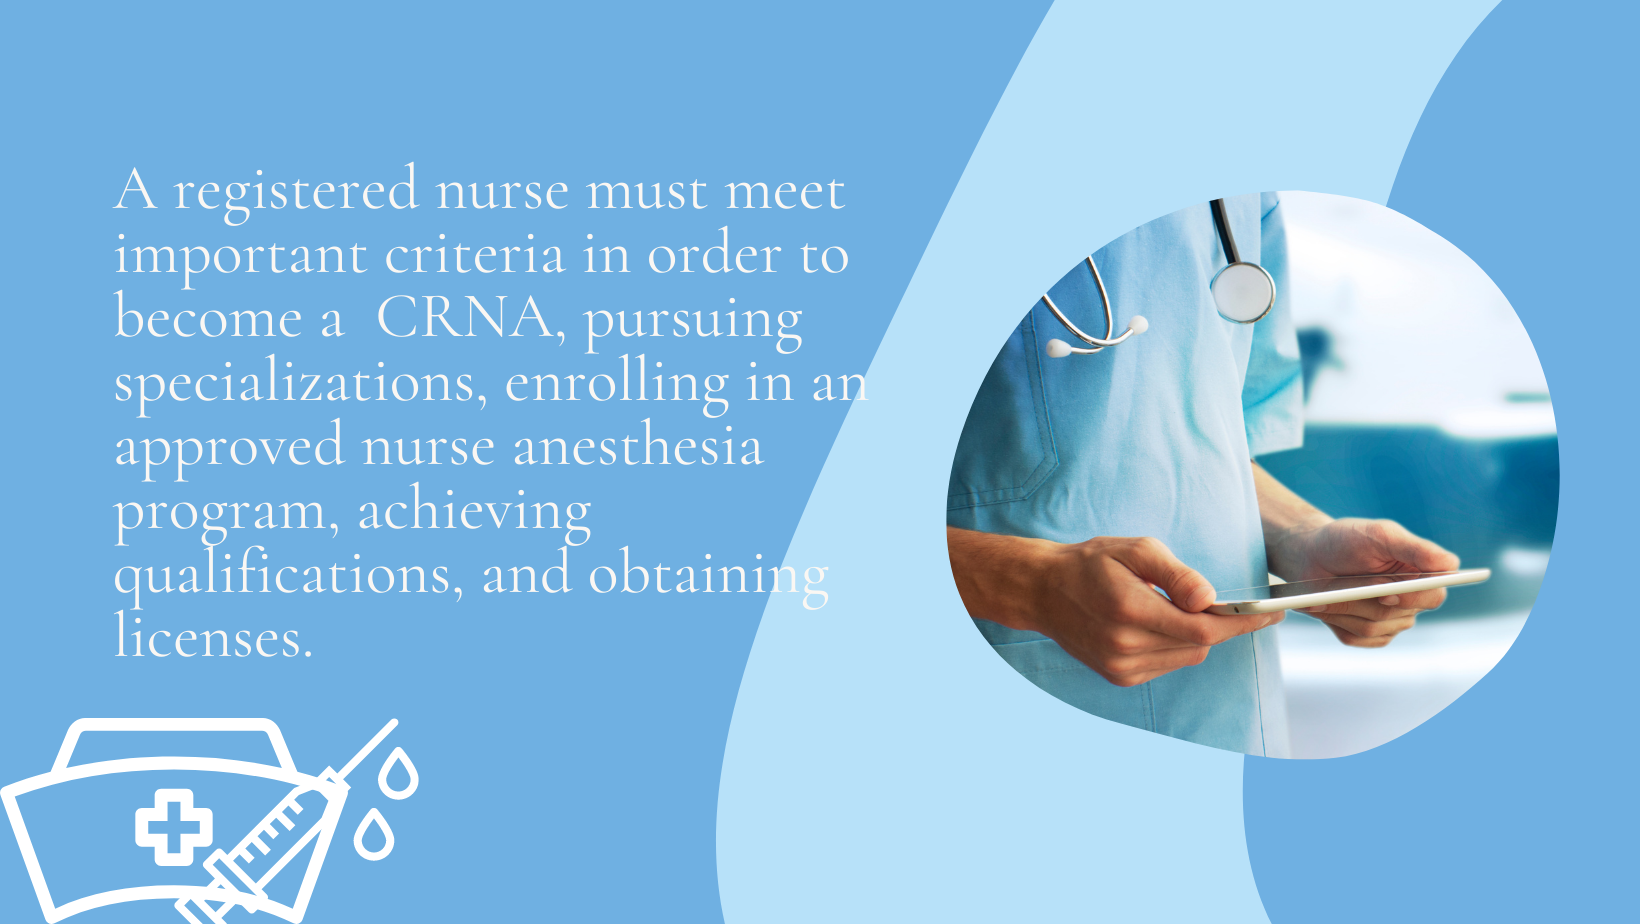 How Does A Registered Nurse Become A CRNA? CRNA School